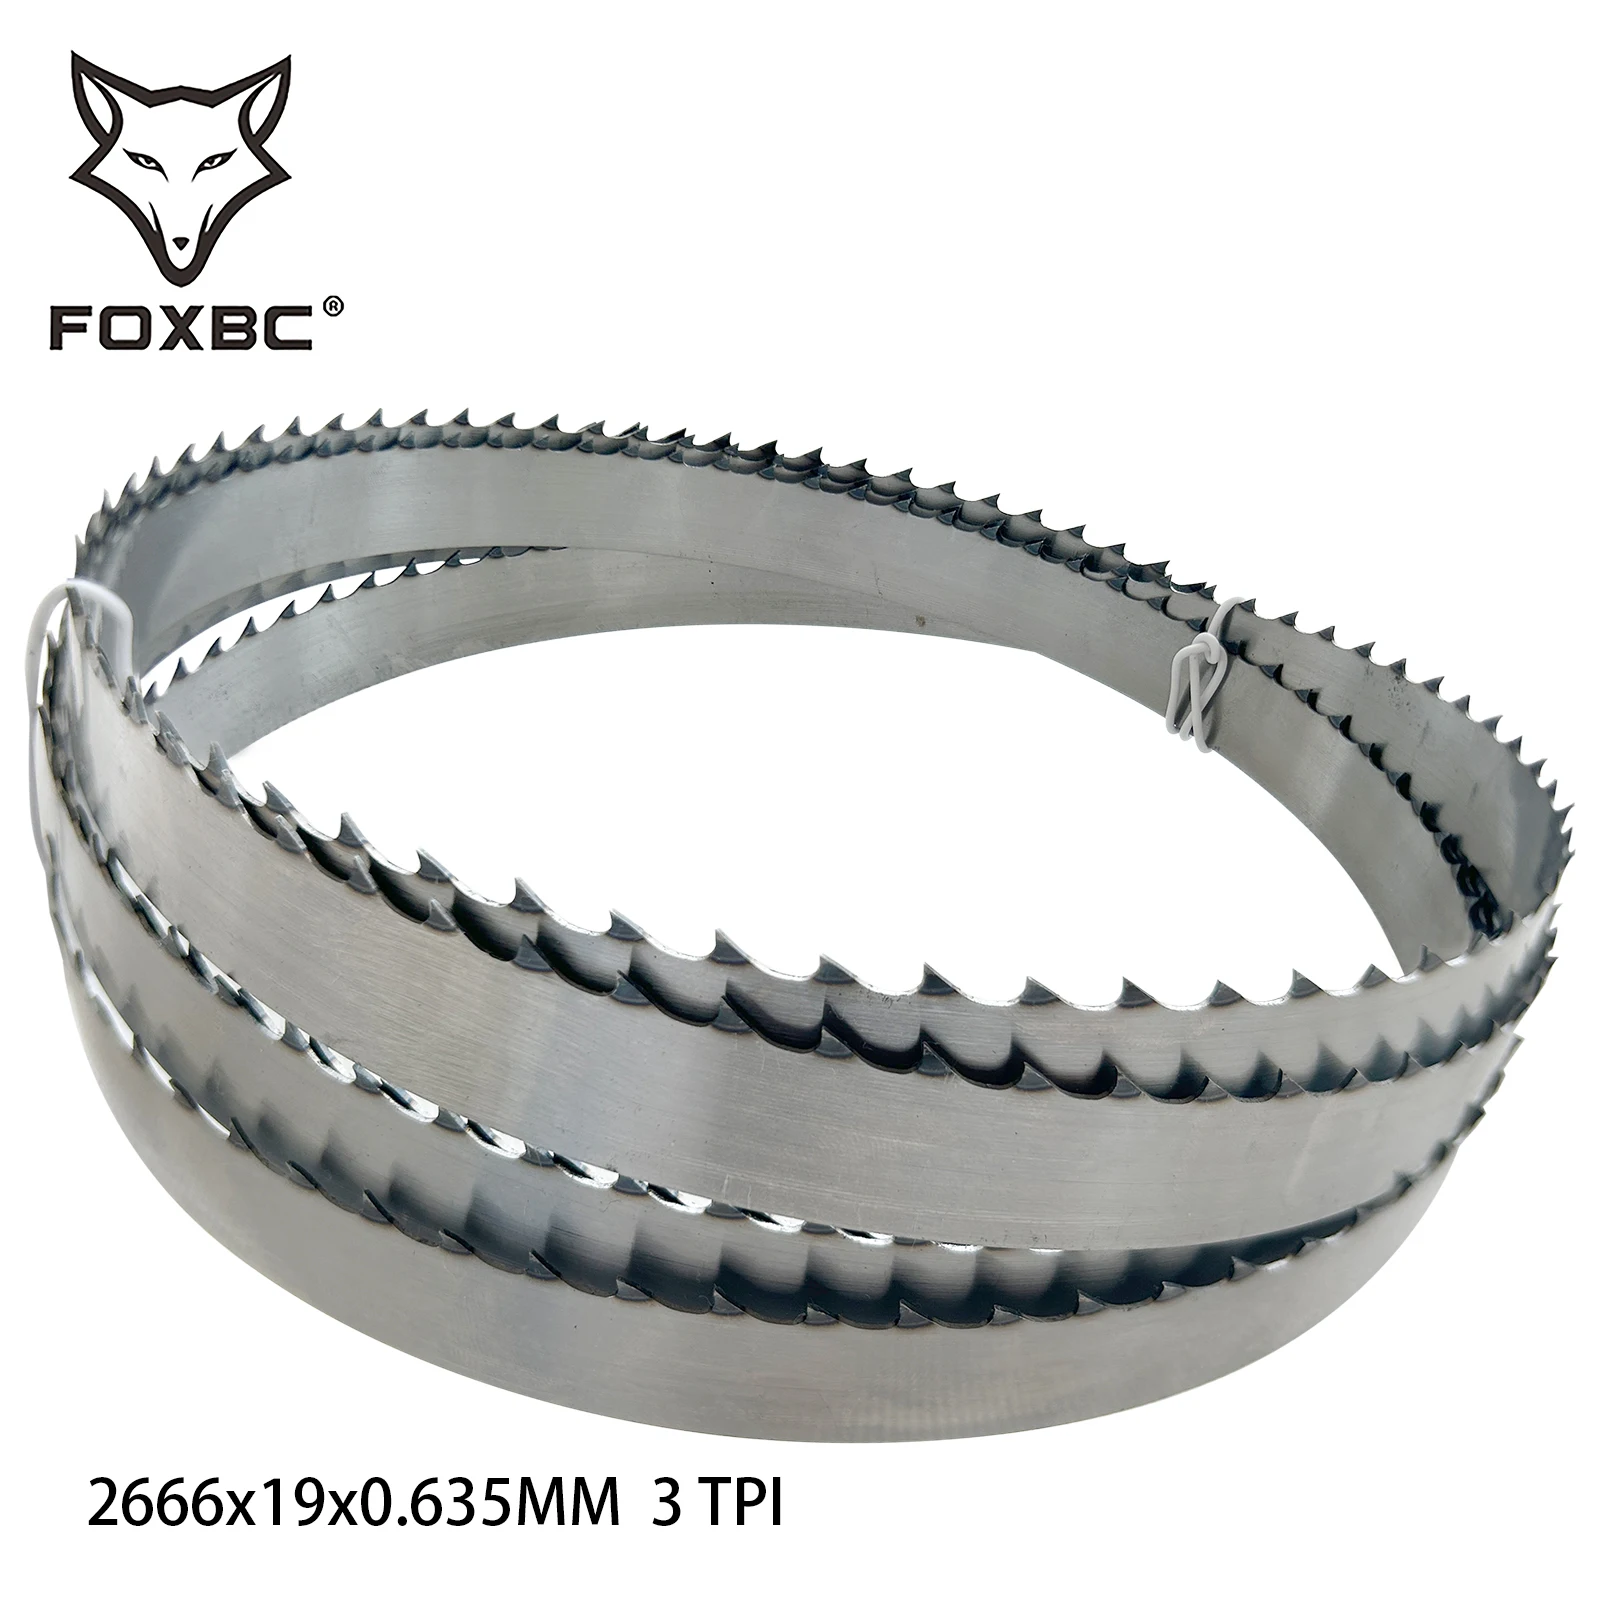 

FOXBC 2666 mm x 19 mm x 3 TPI Bandsaw Blades for Grizzly G0555, G1019, Shop Fox W1706 1PCS